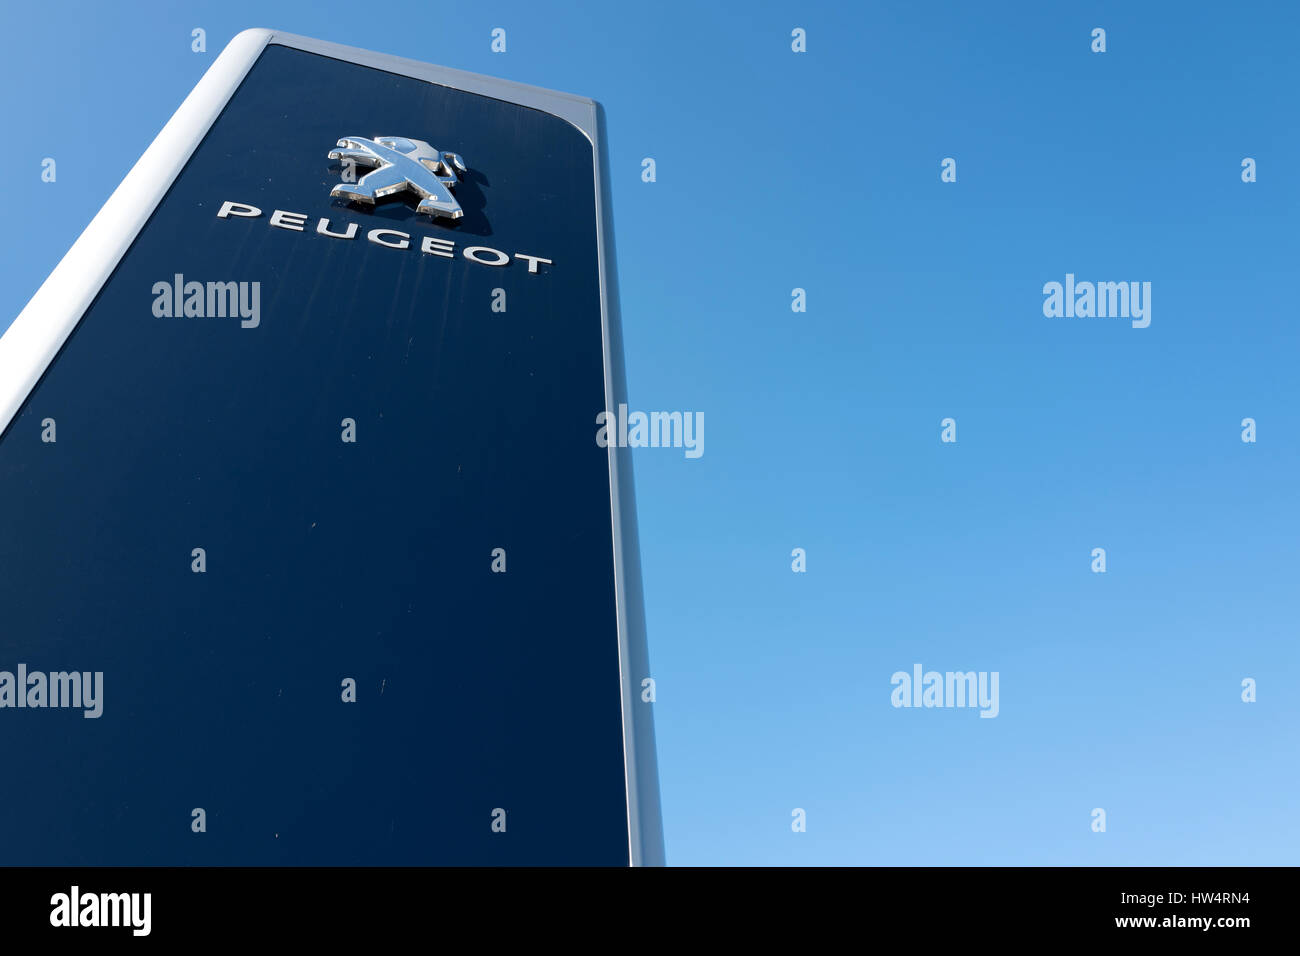 Peugeot dealership sign against blue sky Stock Photo